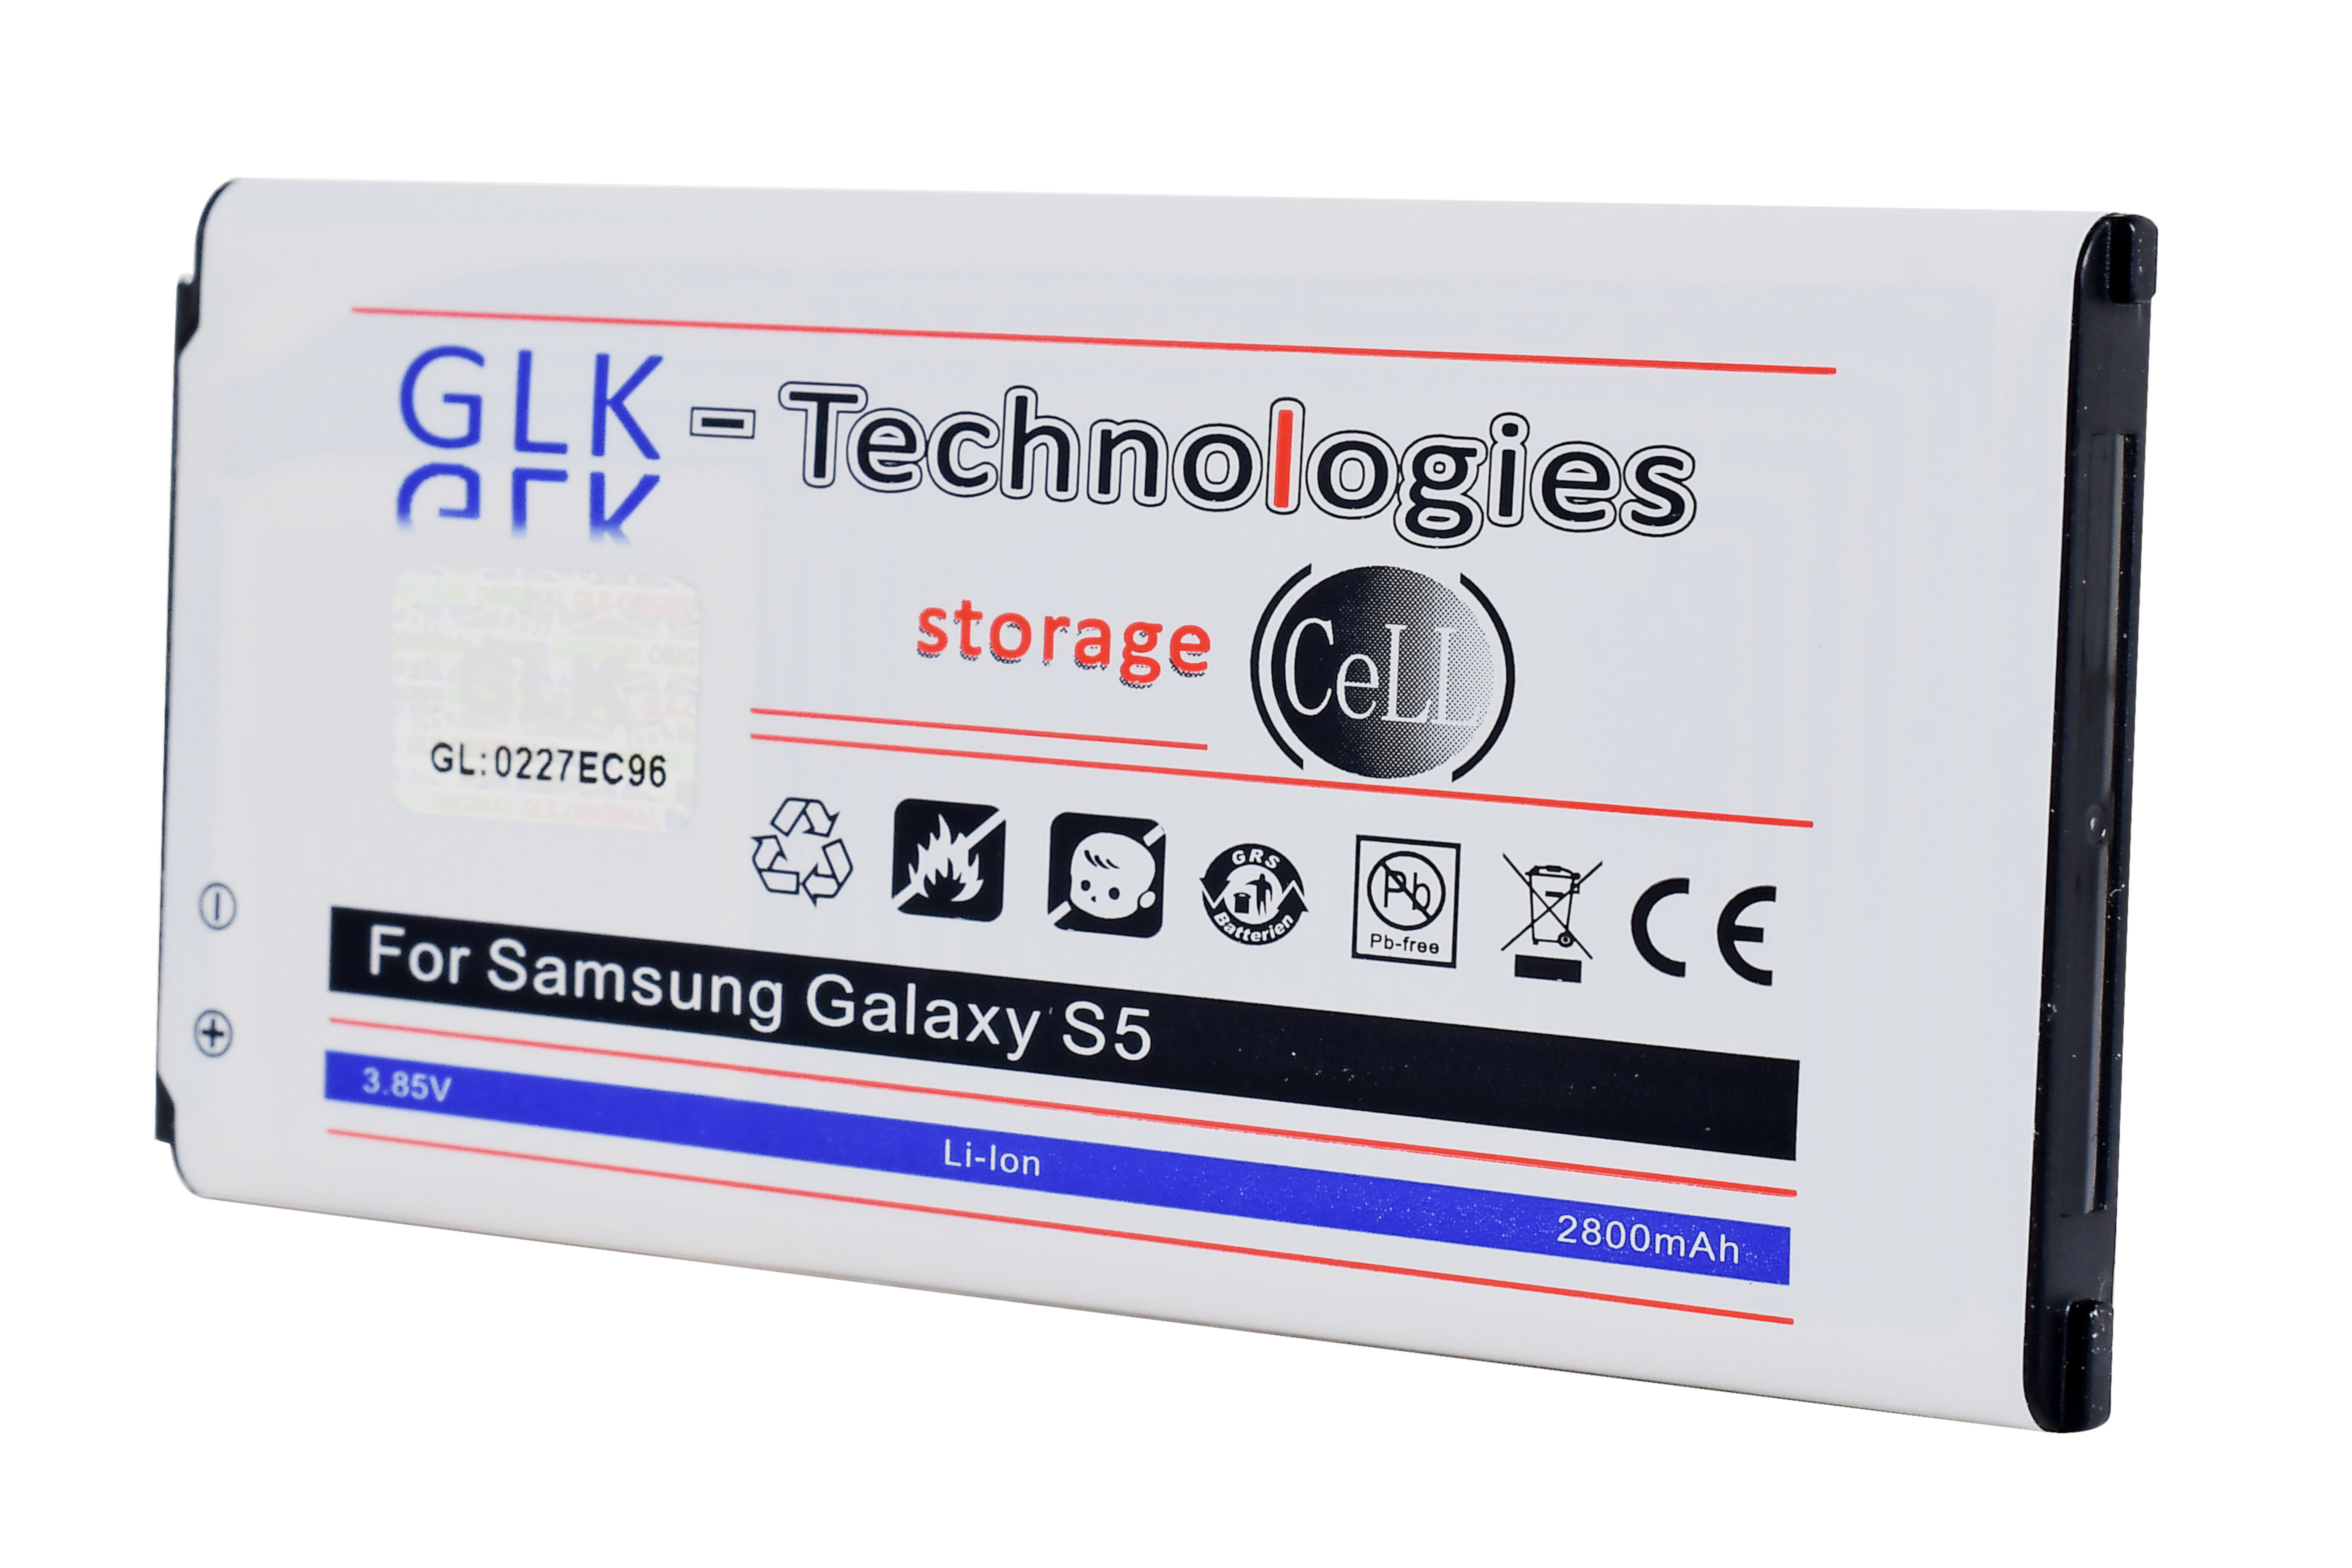 Samsung Ersatz 3000mAh GLK-S5 SM-G900 Li-Ion, für Ersatz Smartphone Akku GLK-TECHNOLOGIES Akku, 3000 S5 3.85 Galaxy Volt, mAh